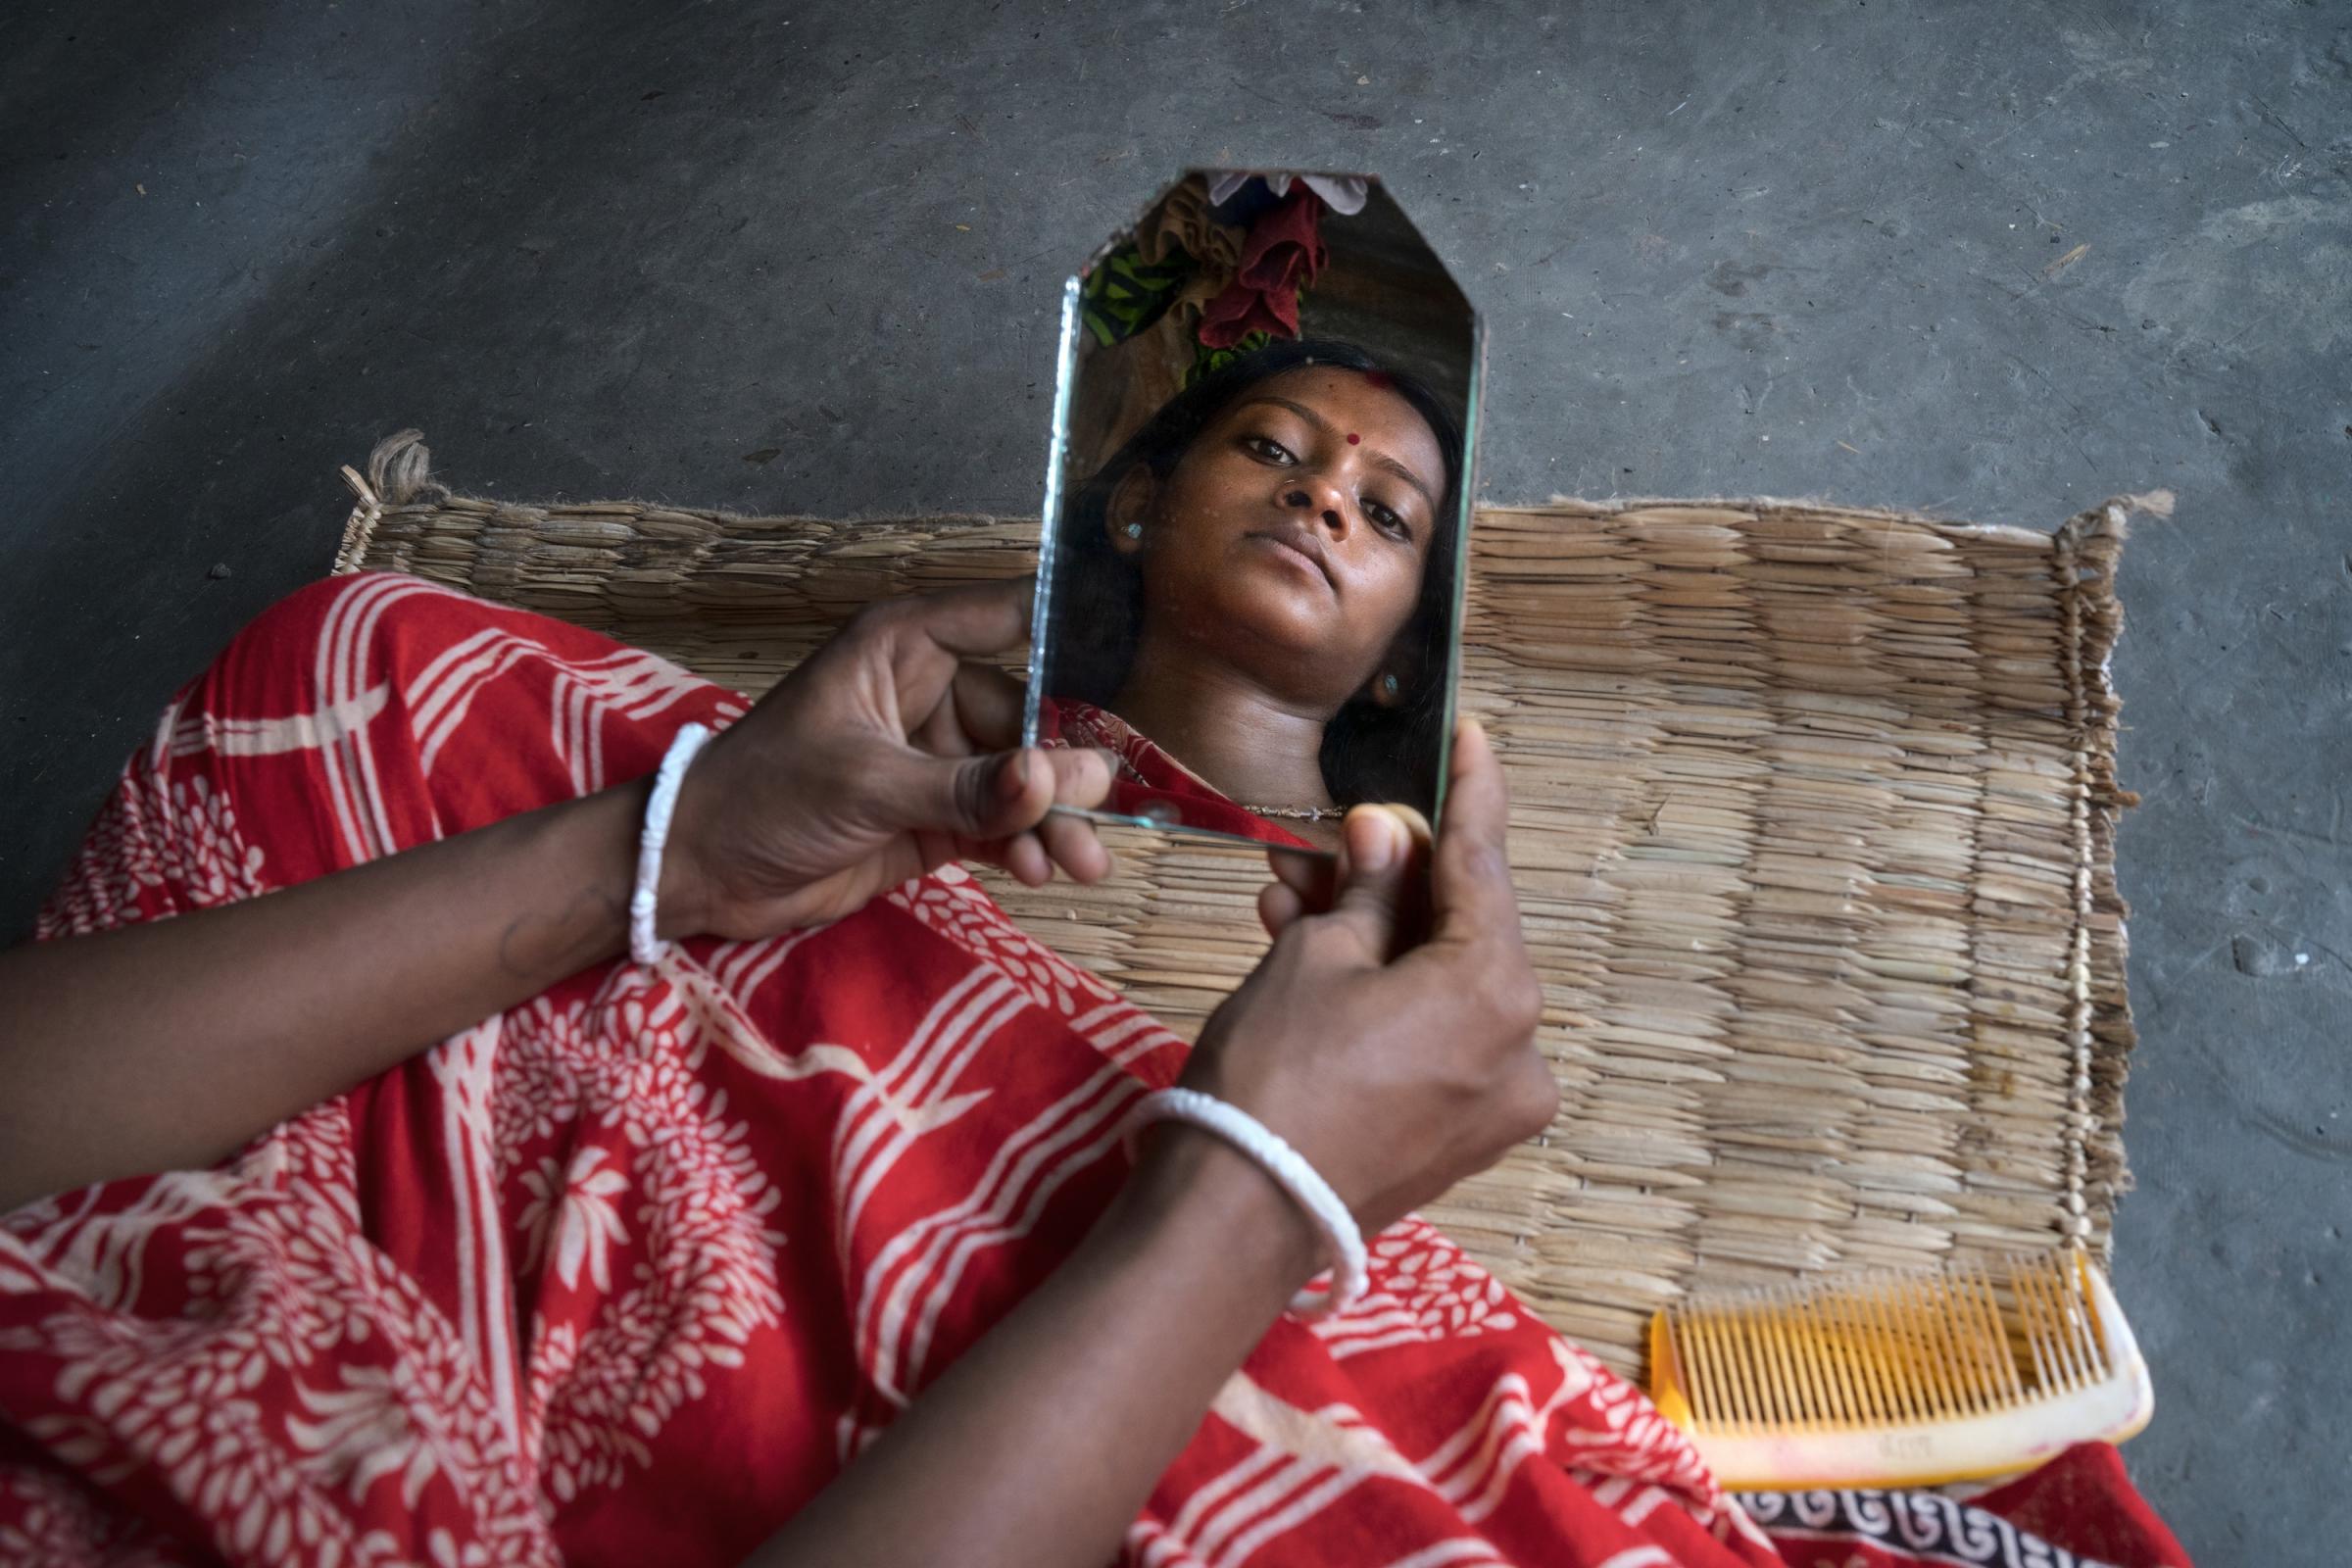 Child marriage in Bangladesh - Sathi Mondol, 16, was seven months pregnant when this...